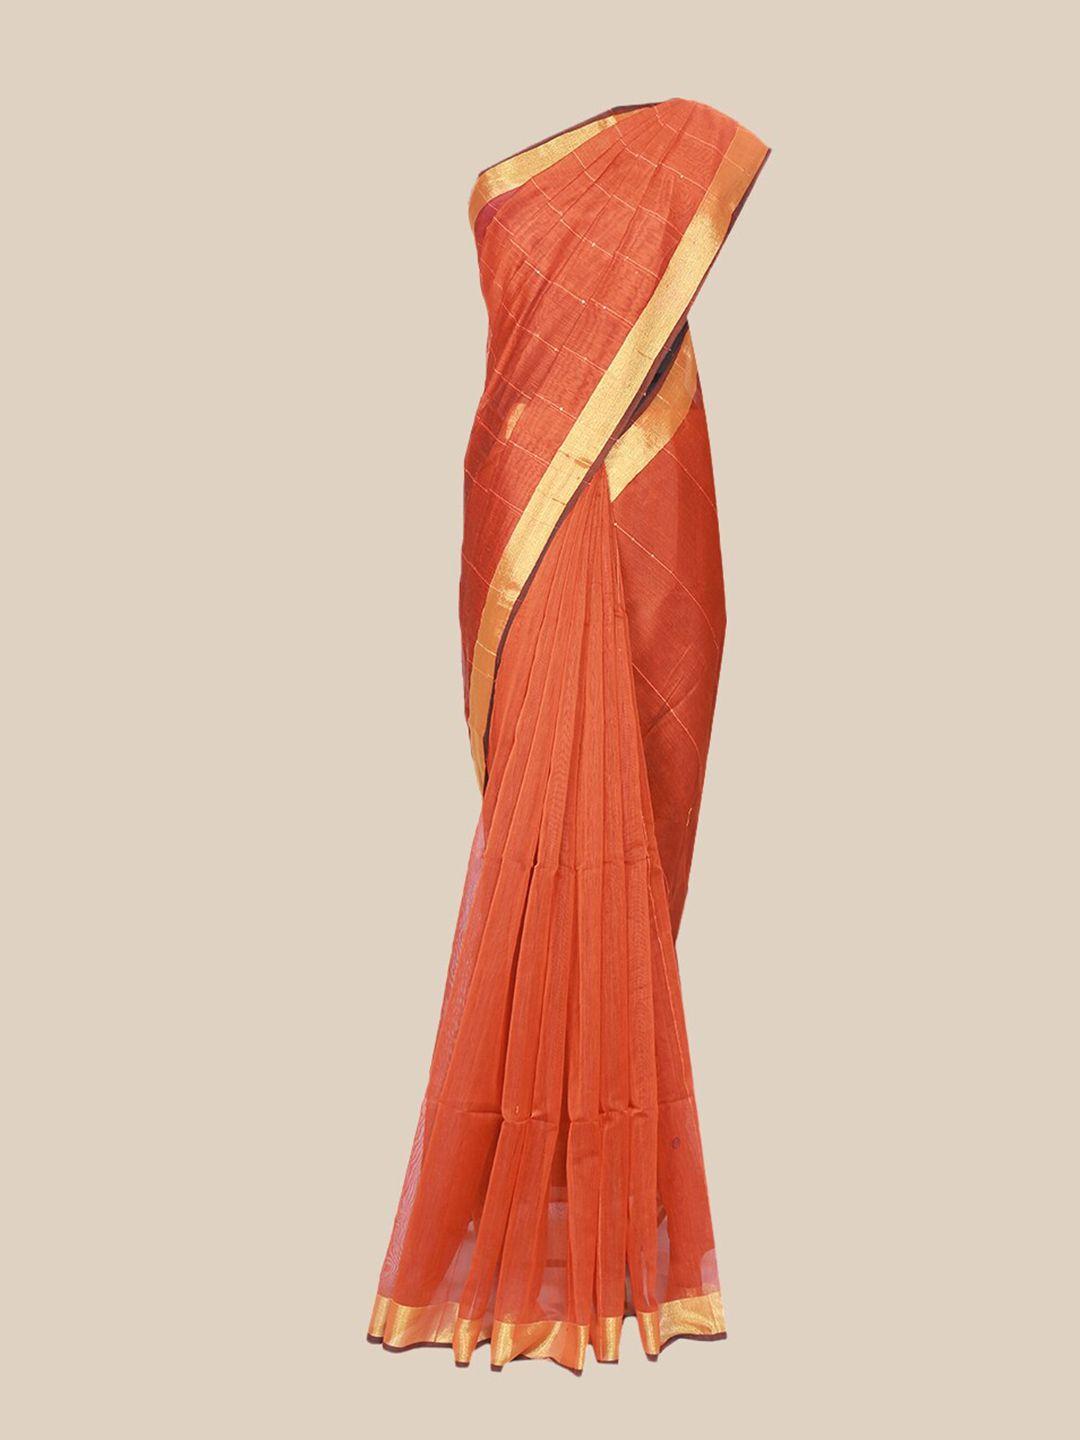 the chennai silks rust & gold-toned striped pure cotton saree